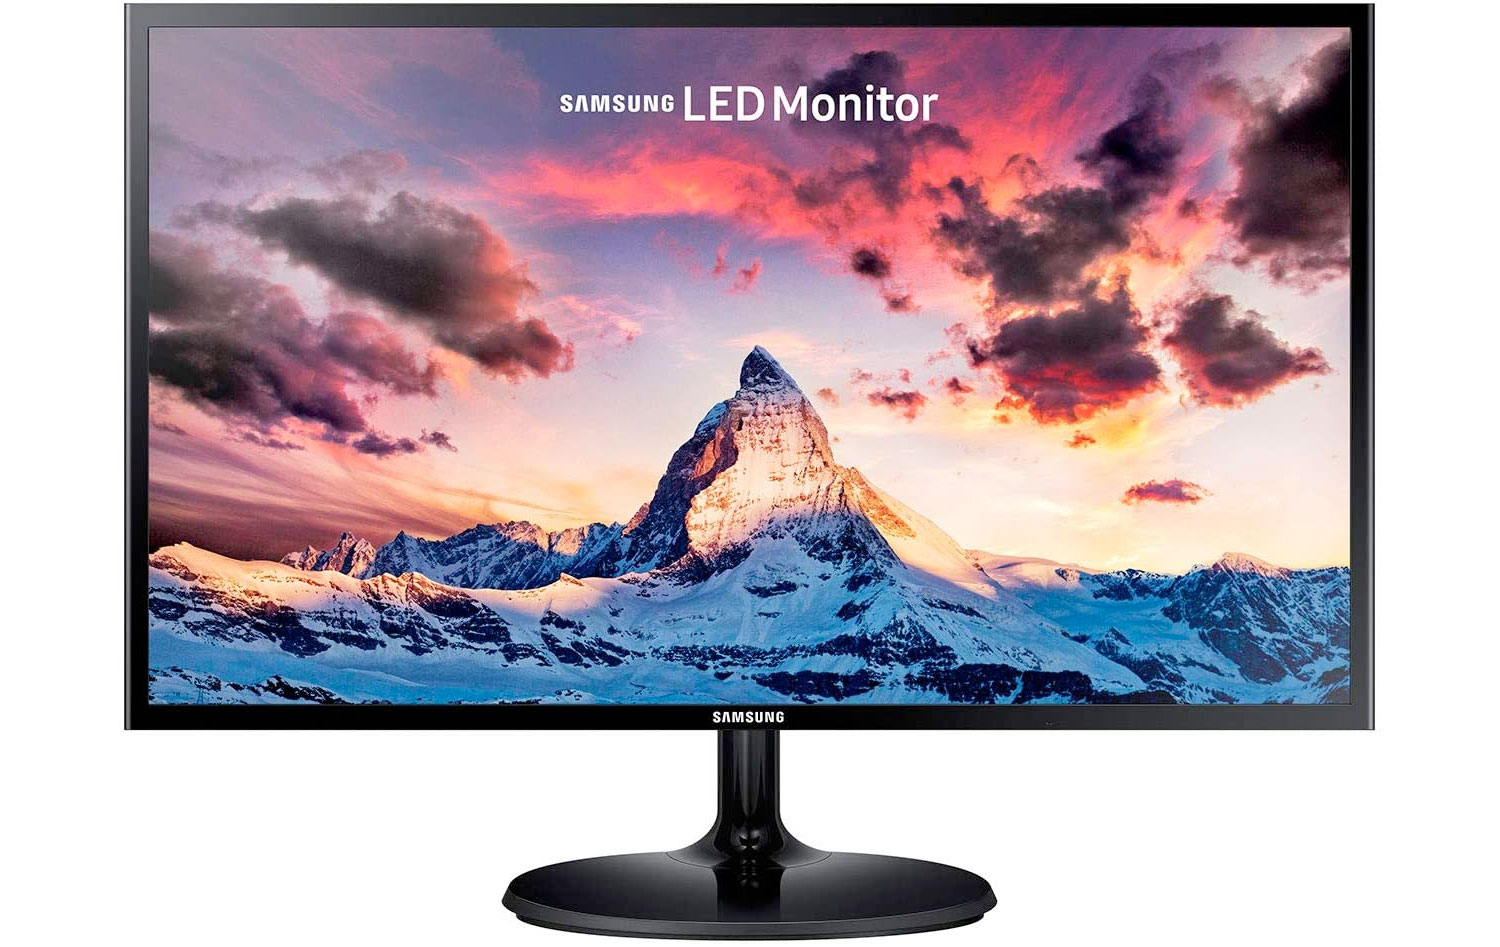 Amazon：Samsung LED 27吋全高清(Full HD)电脑显示屏 (monitor)只卖$147.99